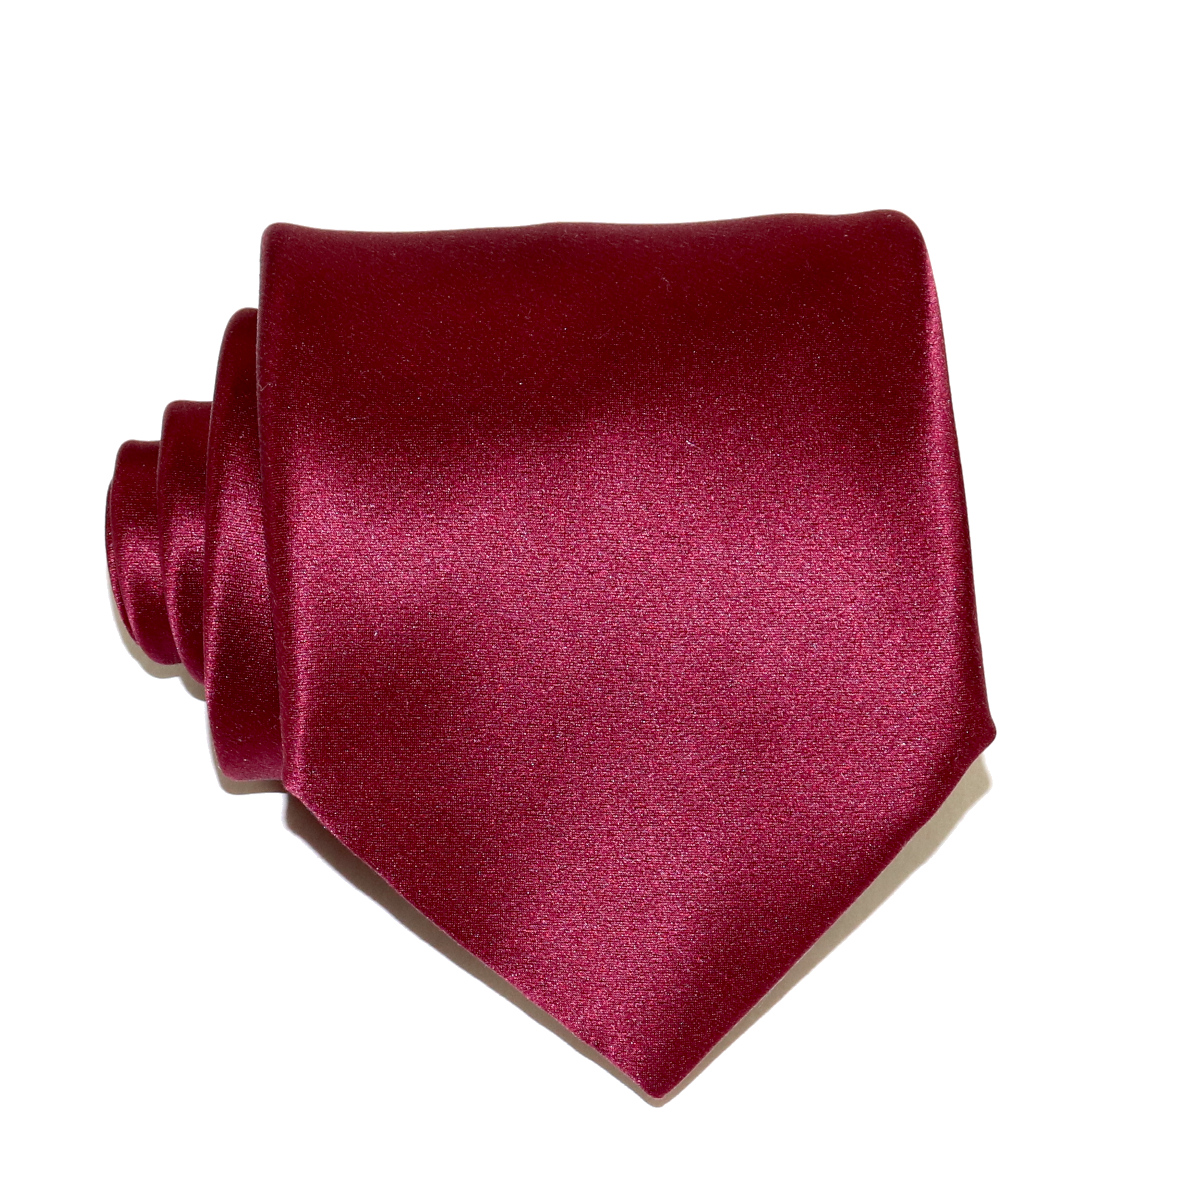 Sovereign Grade 50oz Burgundy Horizontal Solid Twill Silk Tie